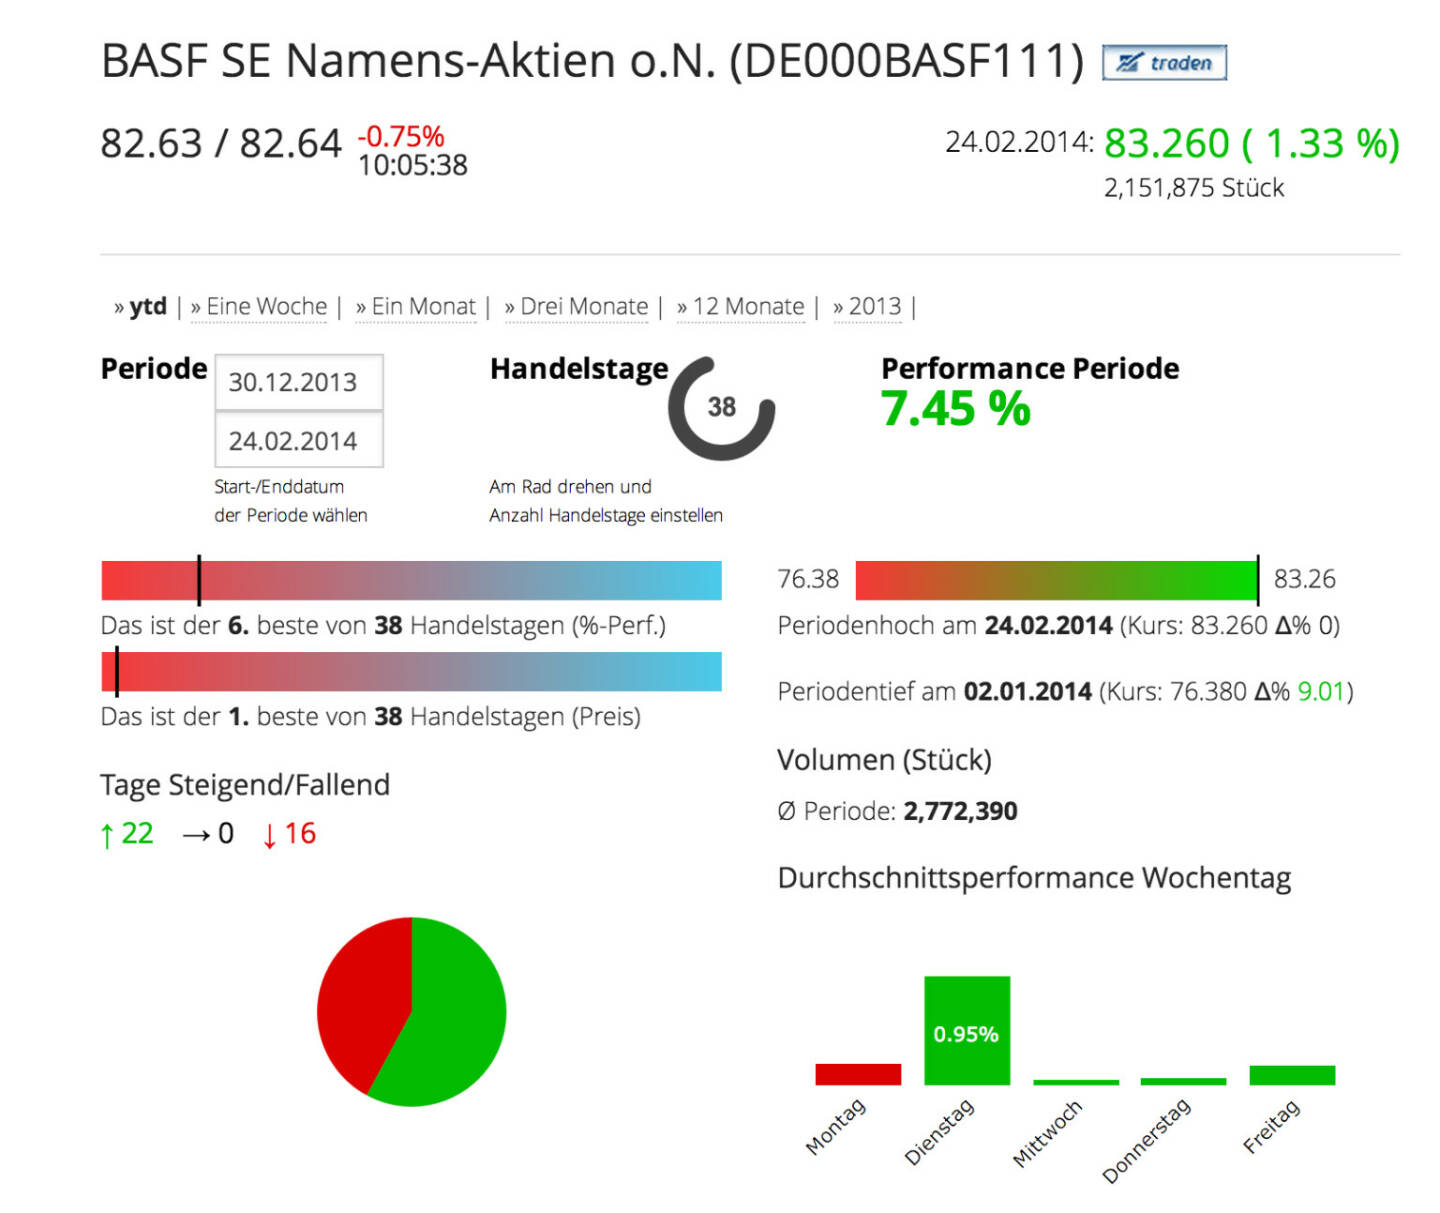 Die BASF im Börse Social Network, http://boerse-social.com/launch/aktie/basf_se_namens-aktien_on